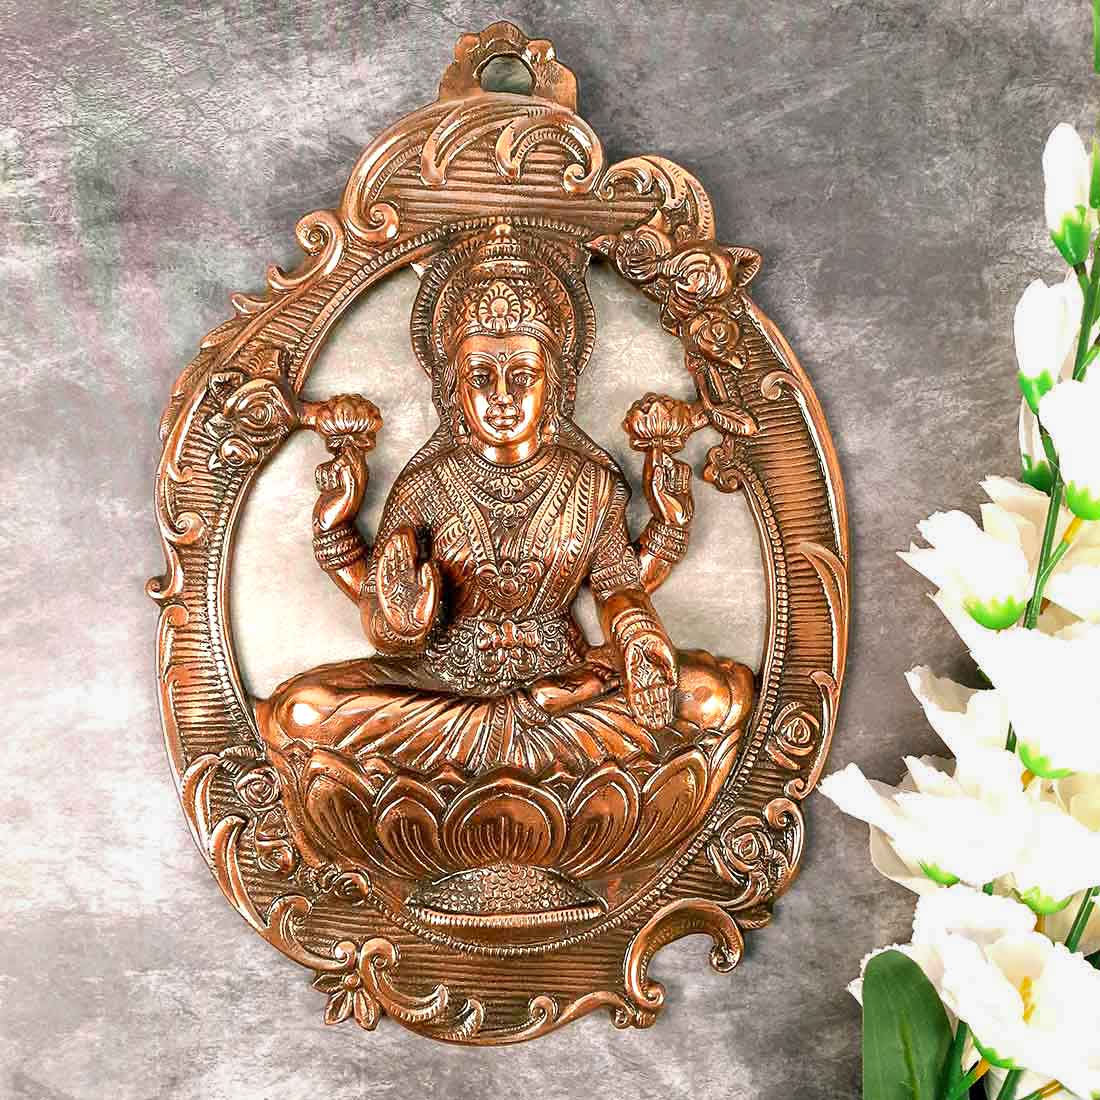 Lakshmi Wall Hanging Statue - Sitting on Lotus / Kamal | Goddess Laxmi Wall Art - for Home, Diwali Puja, Living Room & Office | Antique Wall Idol for Religious & Spiritual Decor  - 16 Inch